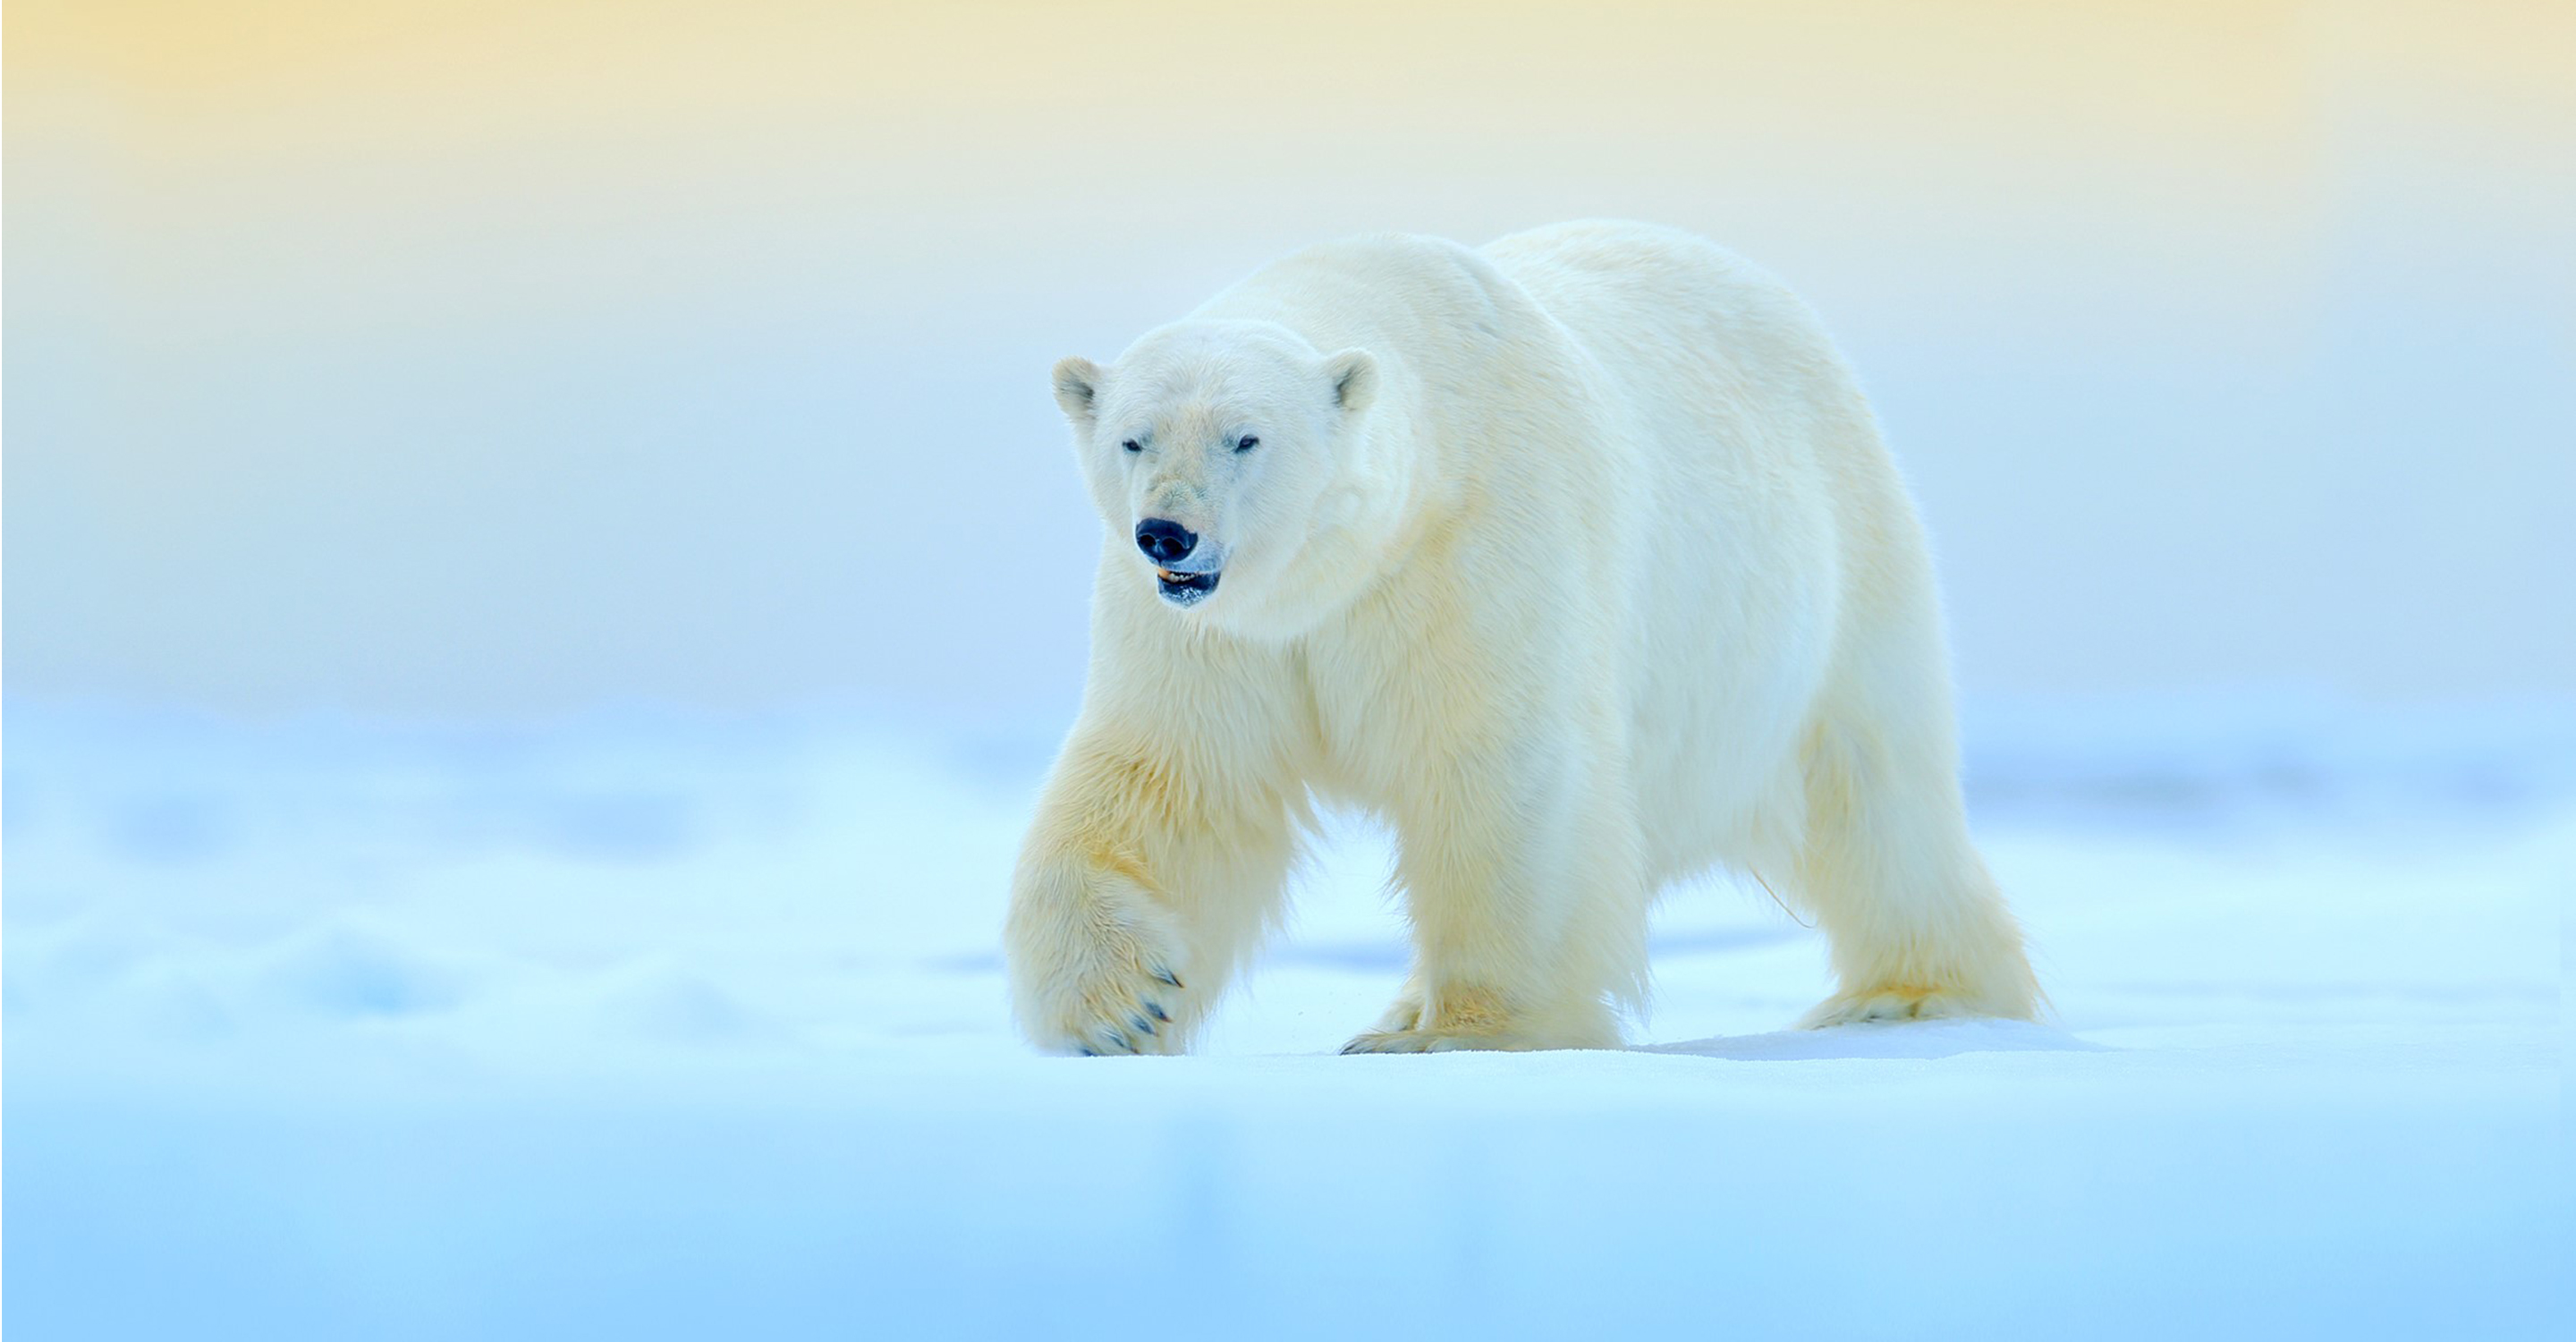 a polar bear saunters through the snow